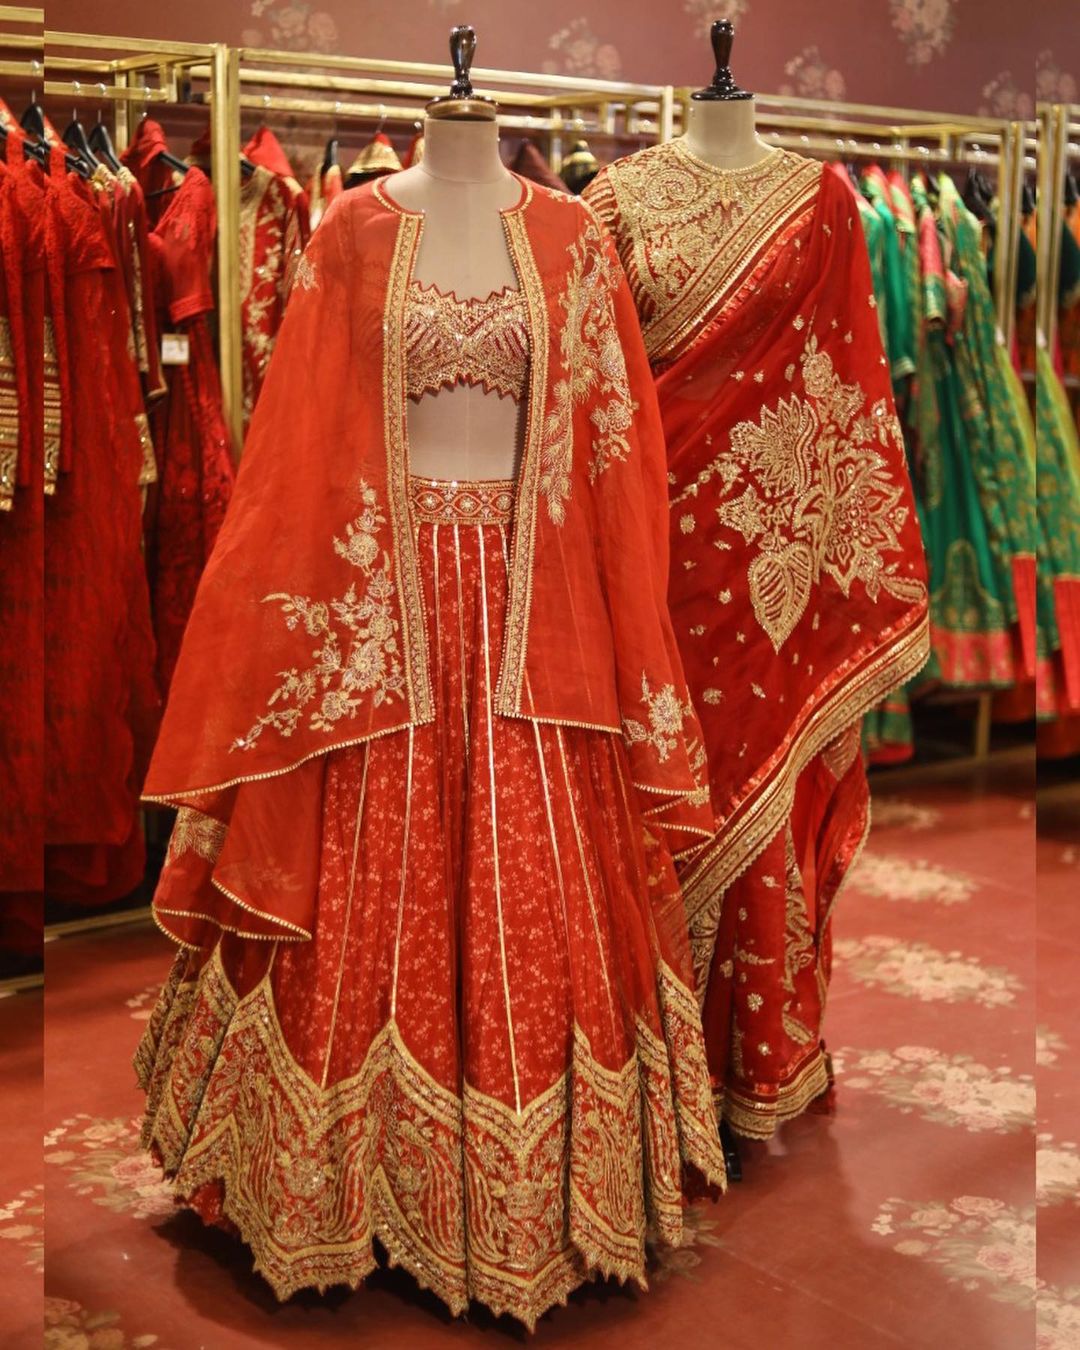 Mark Your Calendars For 2023 Bridal Exhibitions In Delhi & Mumbai